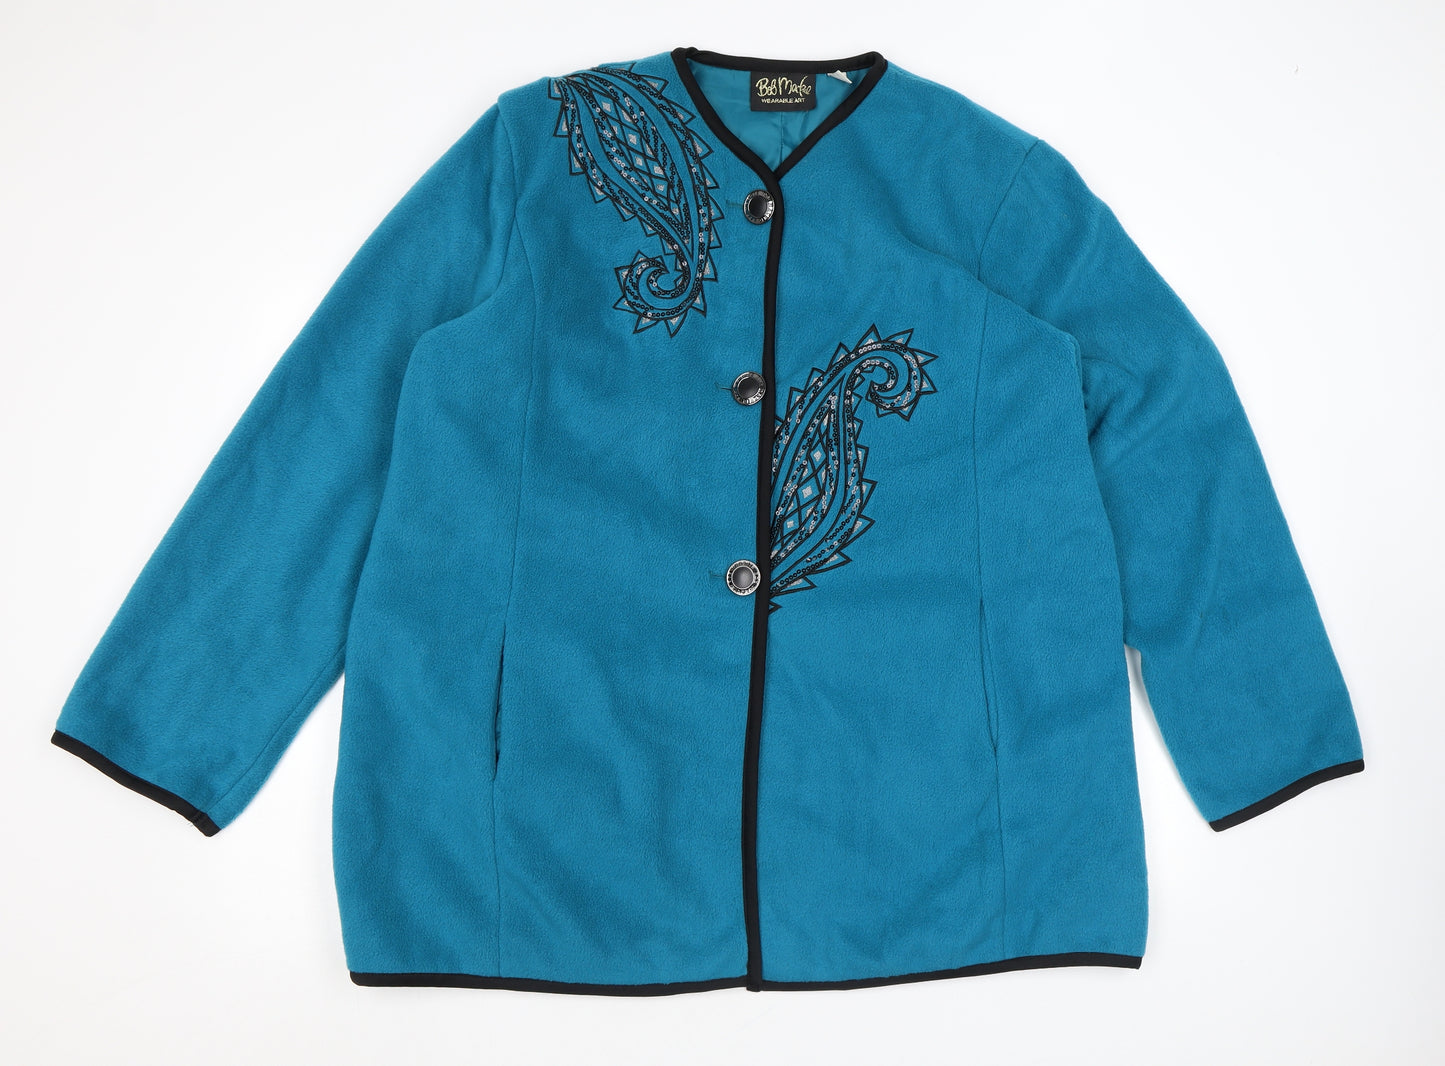 Bob Mackie Womens Blue Paisley Jacket Size XL Button